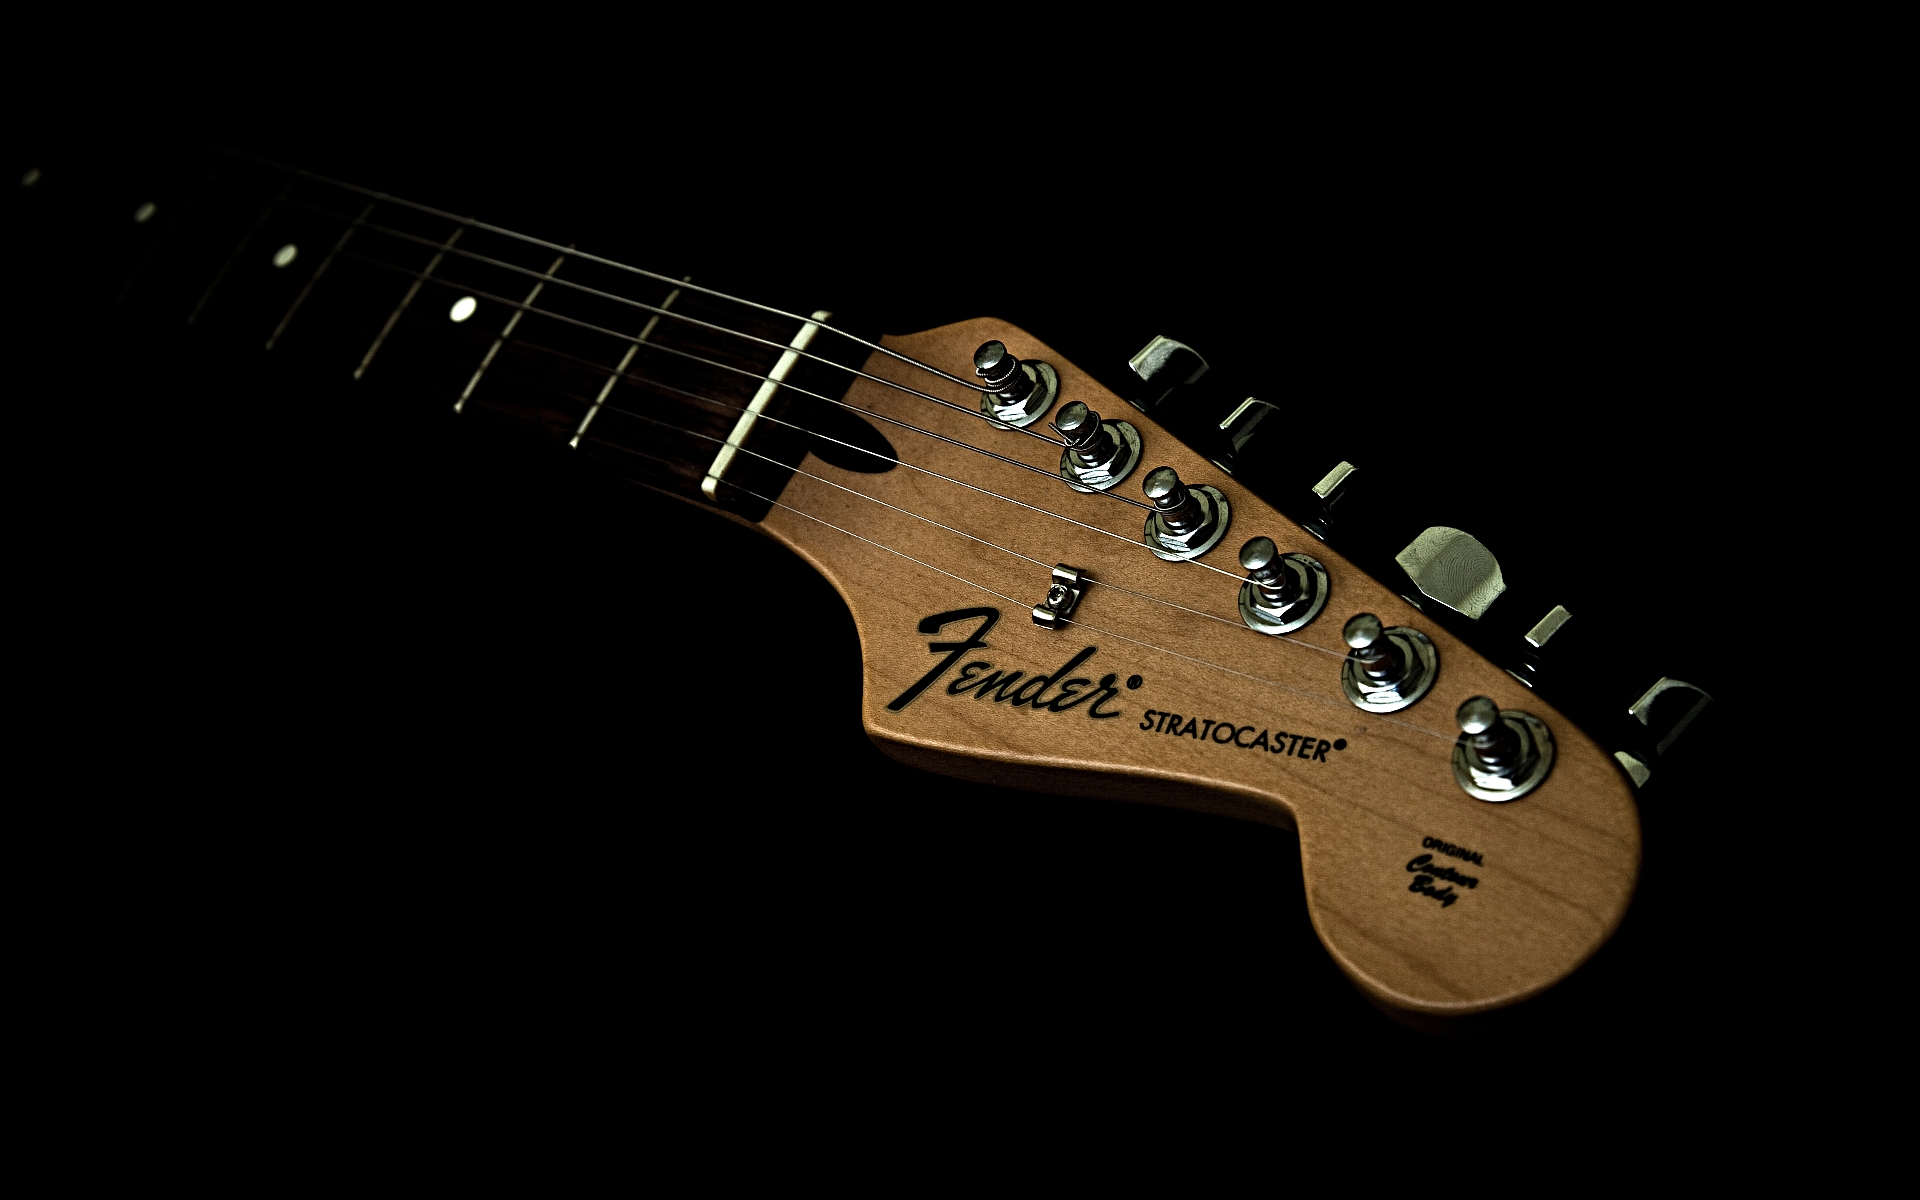 Fender Stratocaster Background Winter Wallpaper